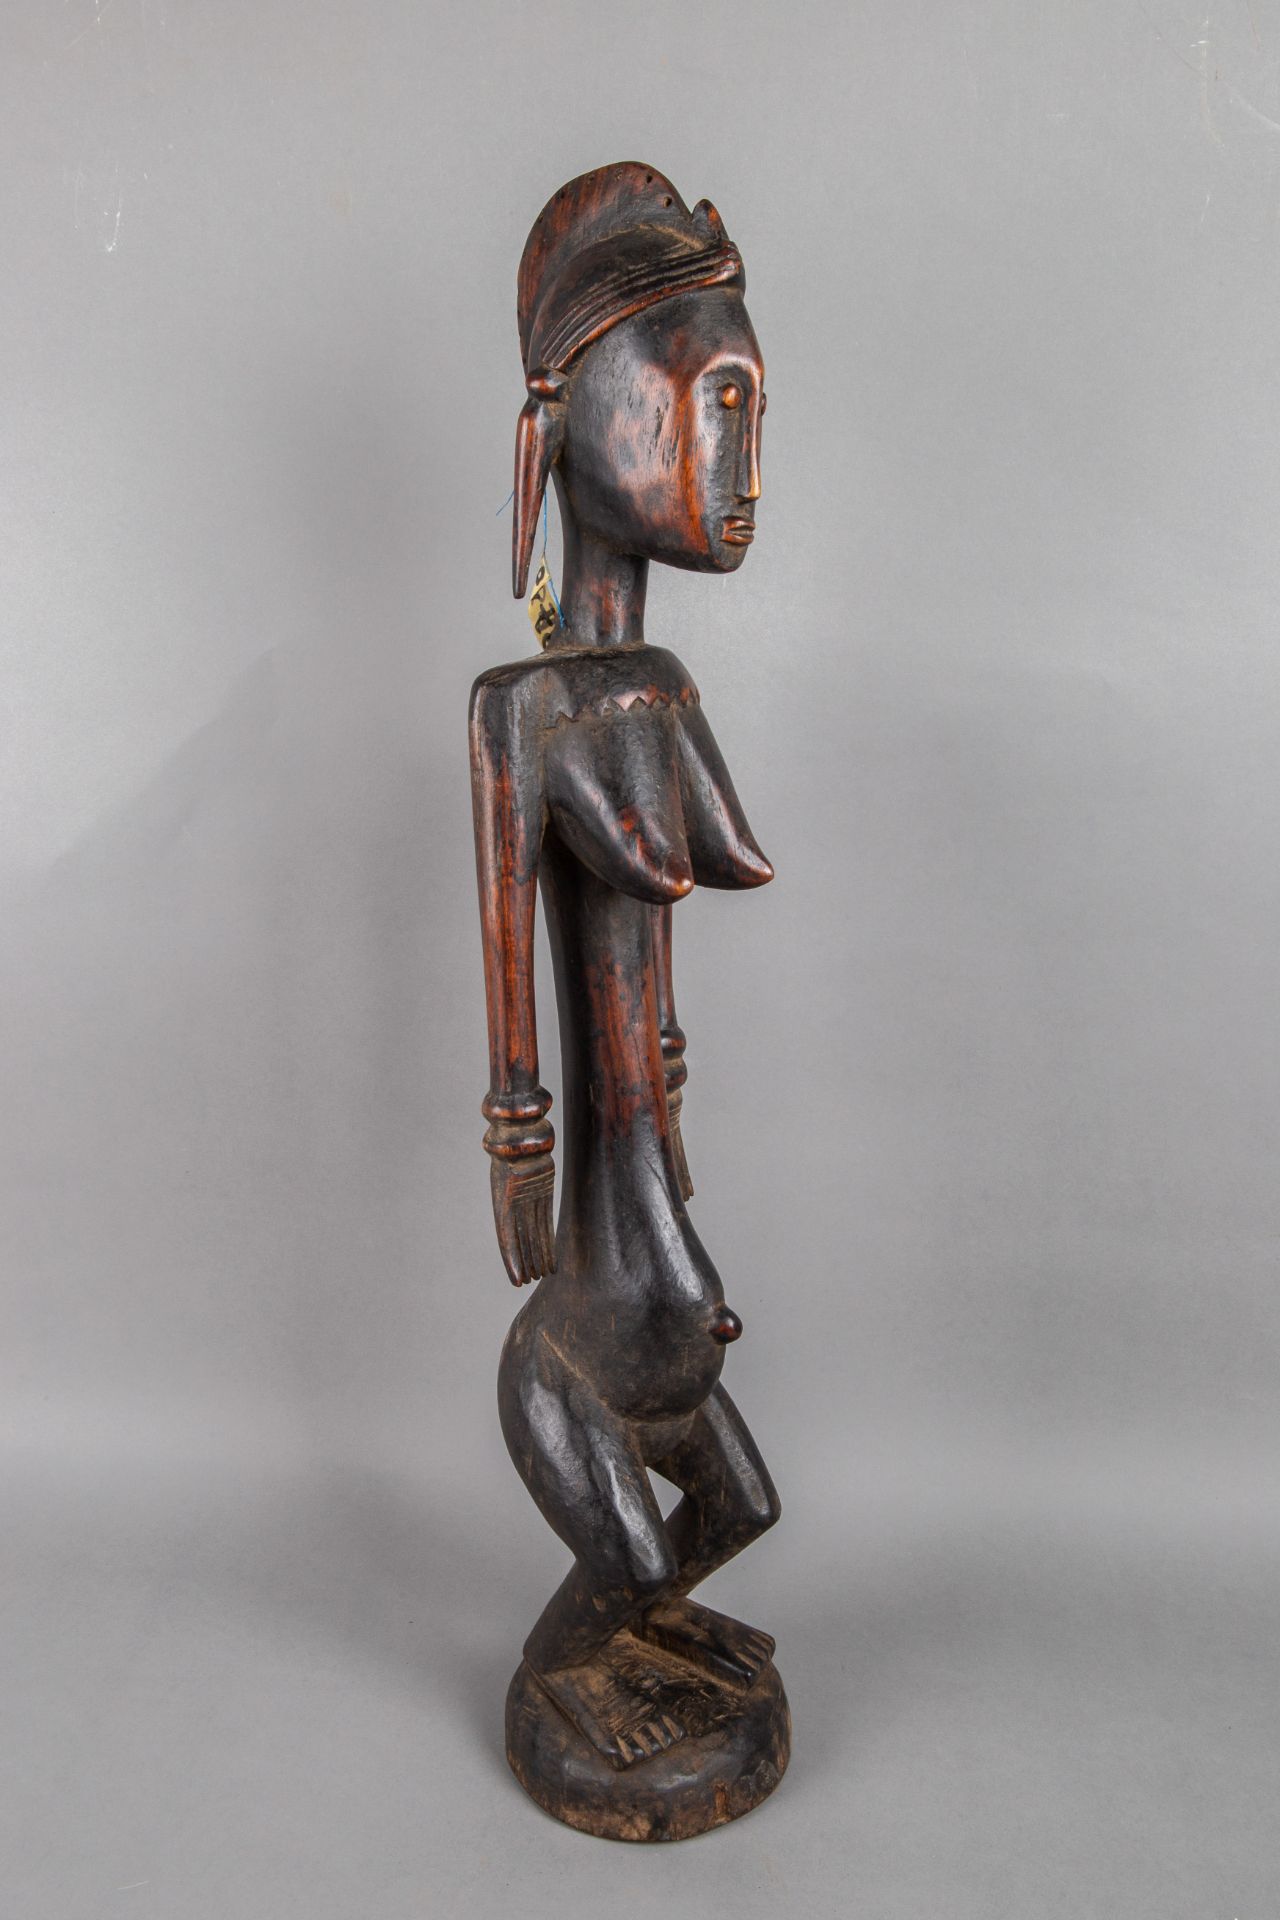 Stehende weibliche Figur 'jo nyeleni', Holz, Bamana, Mali - Bild 4 aus 4